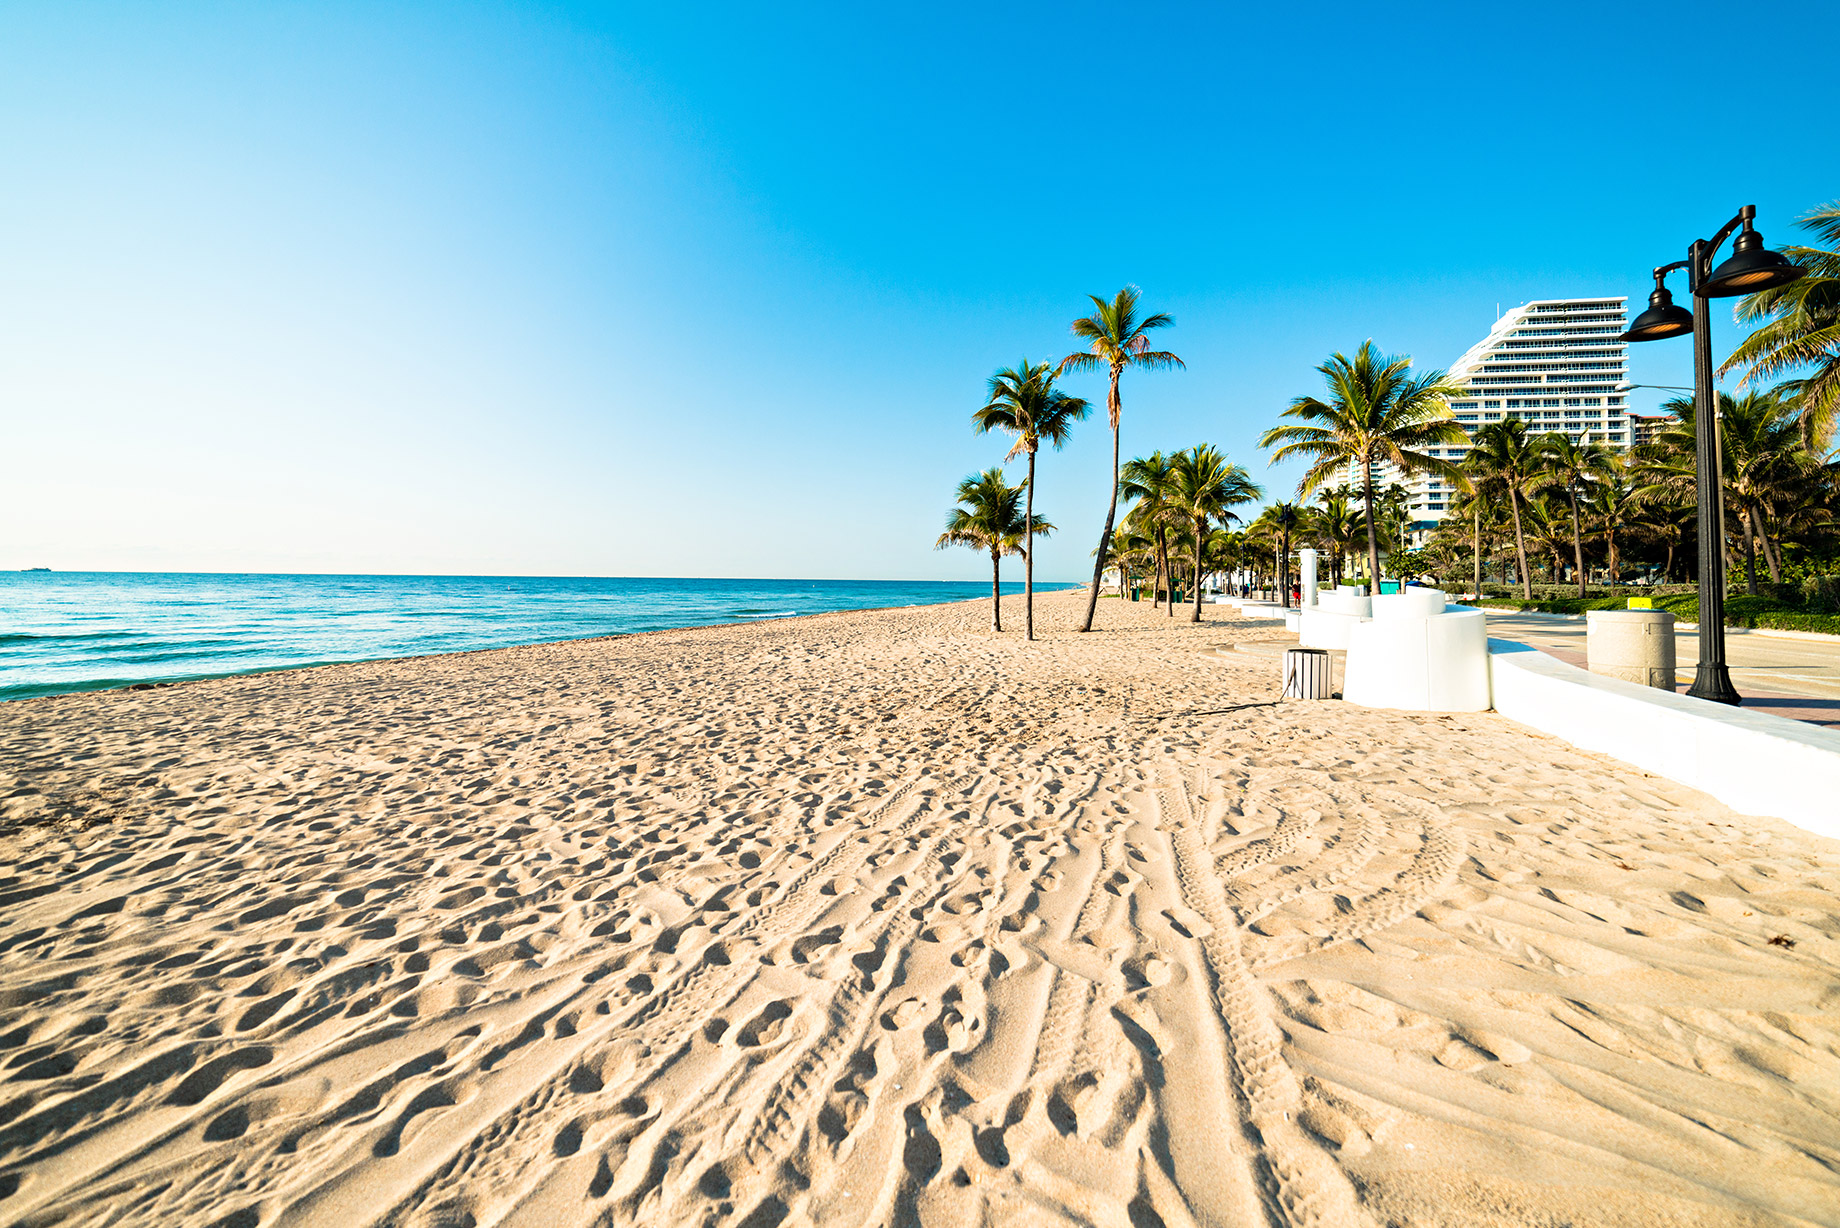 Beach - Fort Lauderdale, Florida, USA